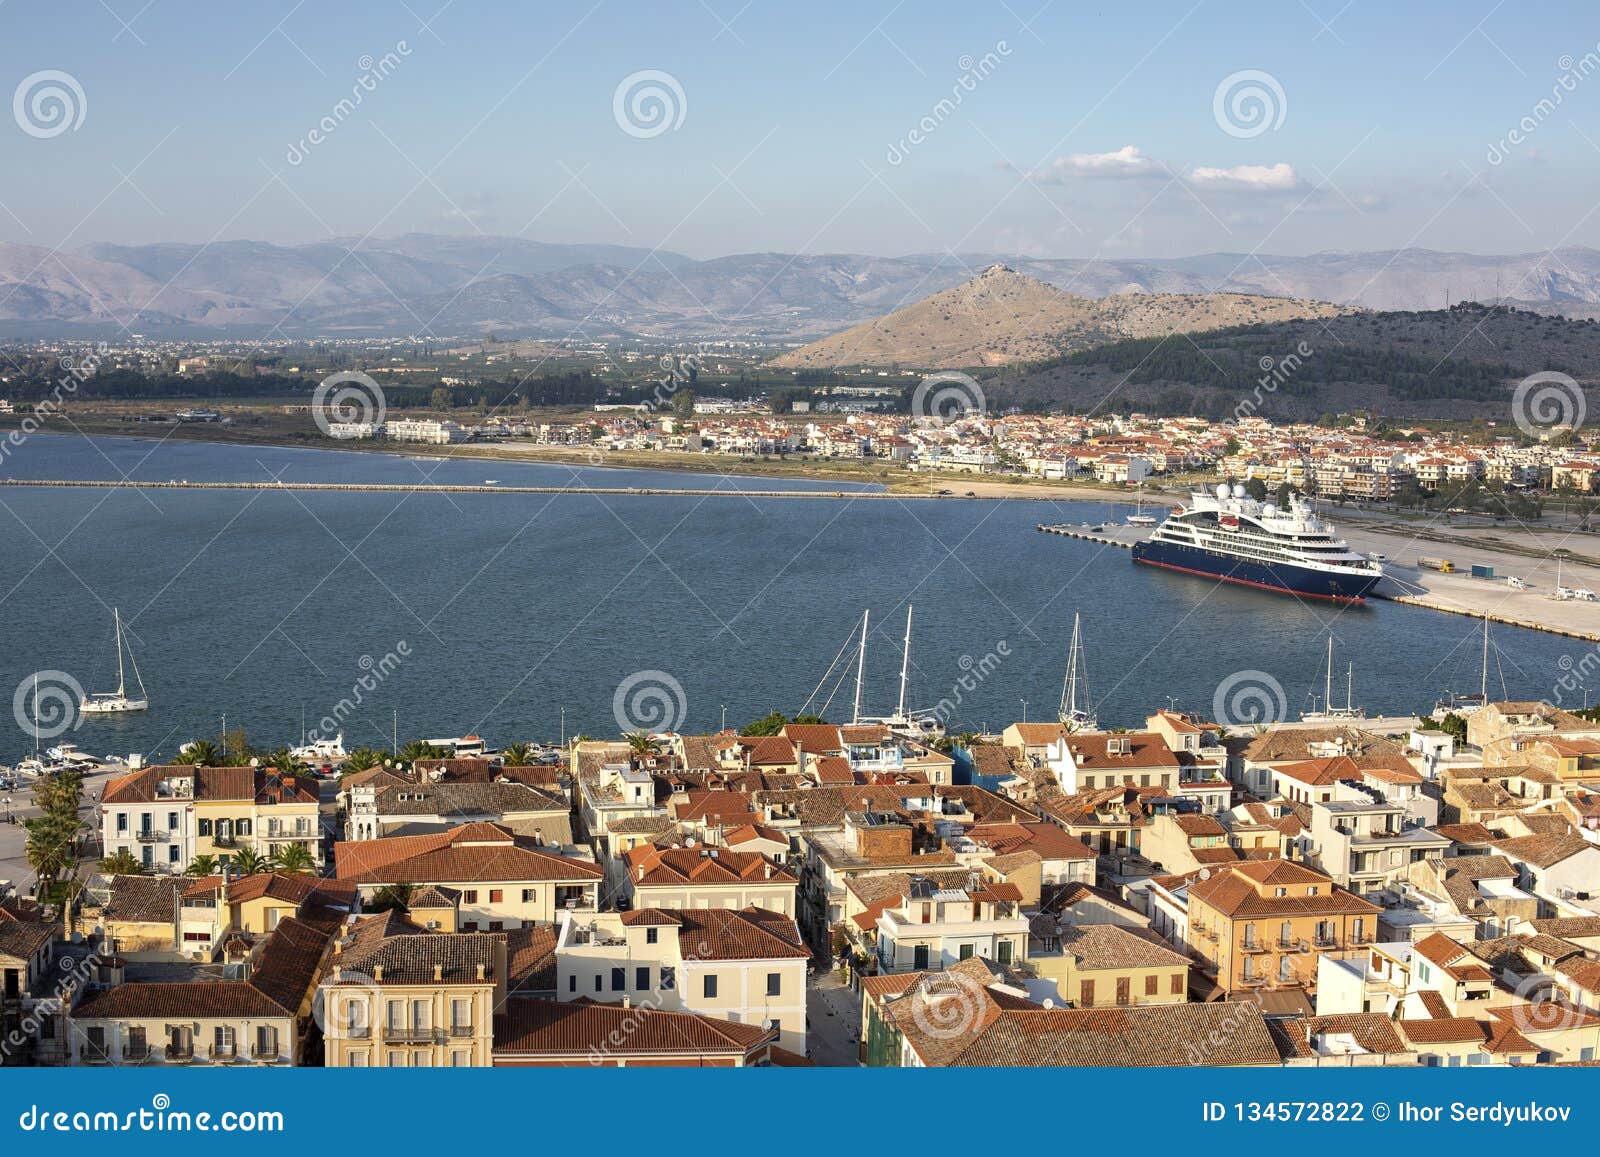 nafplion panoramic view. aerial view on the bay and on the city nafplion nauplia, nafplio, greece - immagine